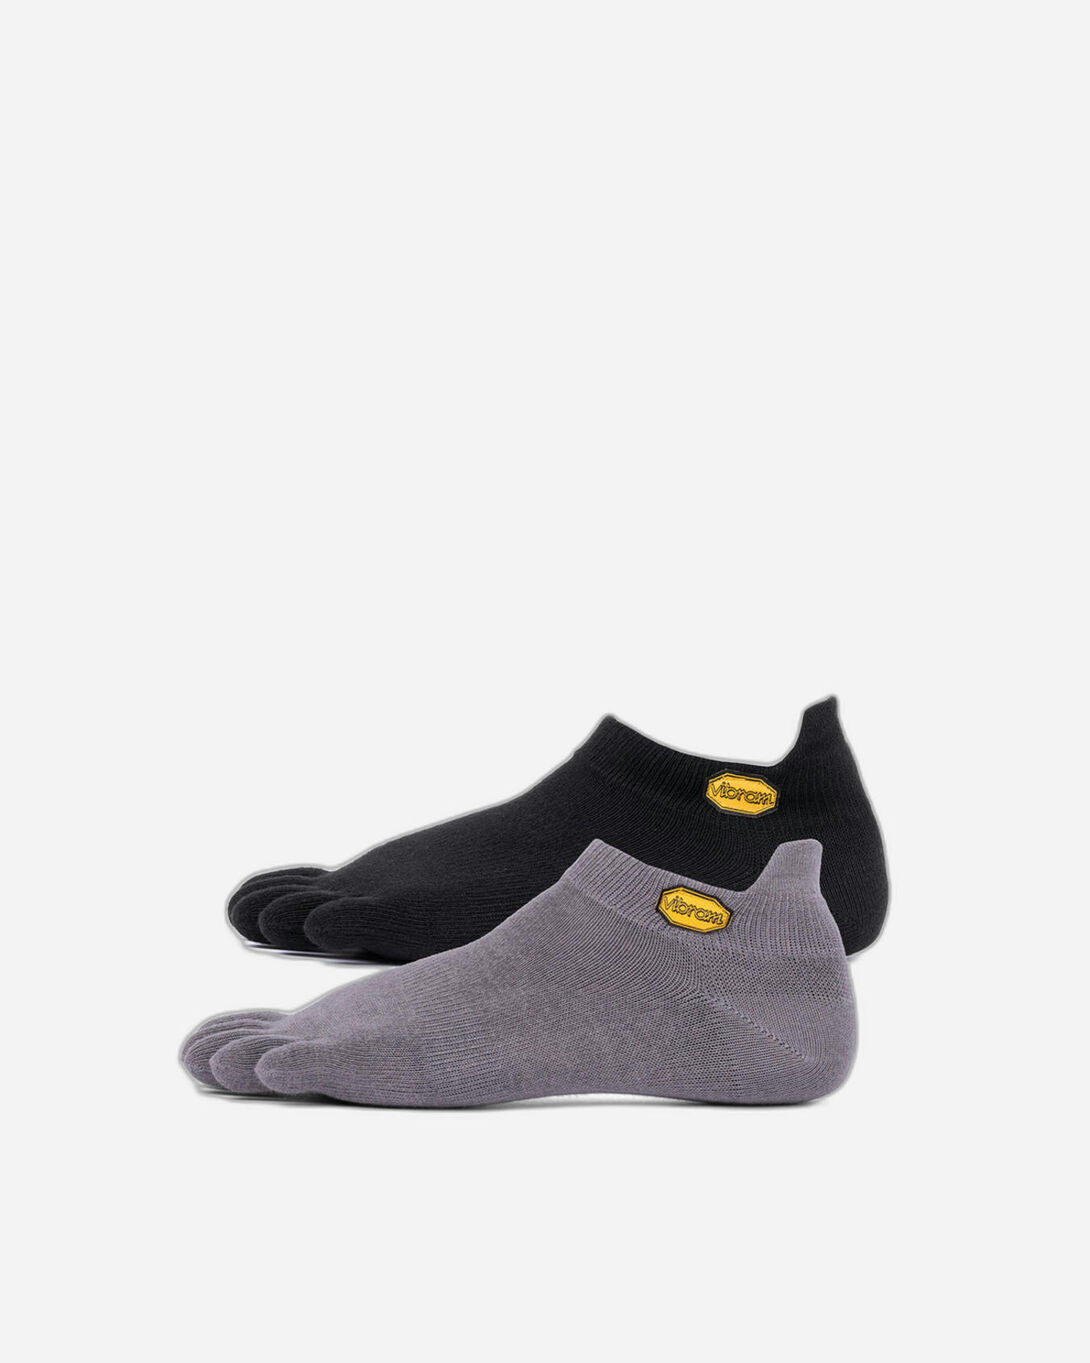 Vibram 5TOE Sock No Show 2 Pack Black / Grey